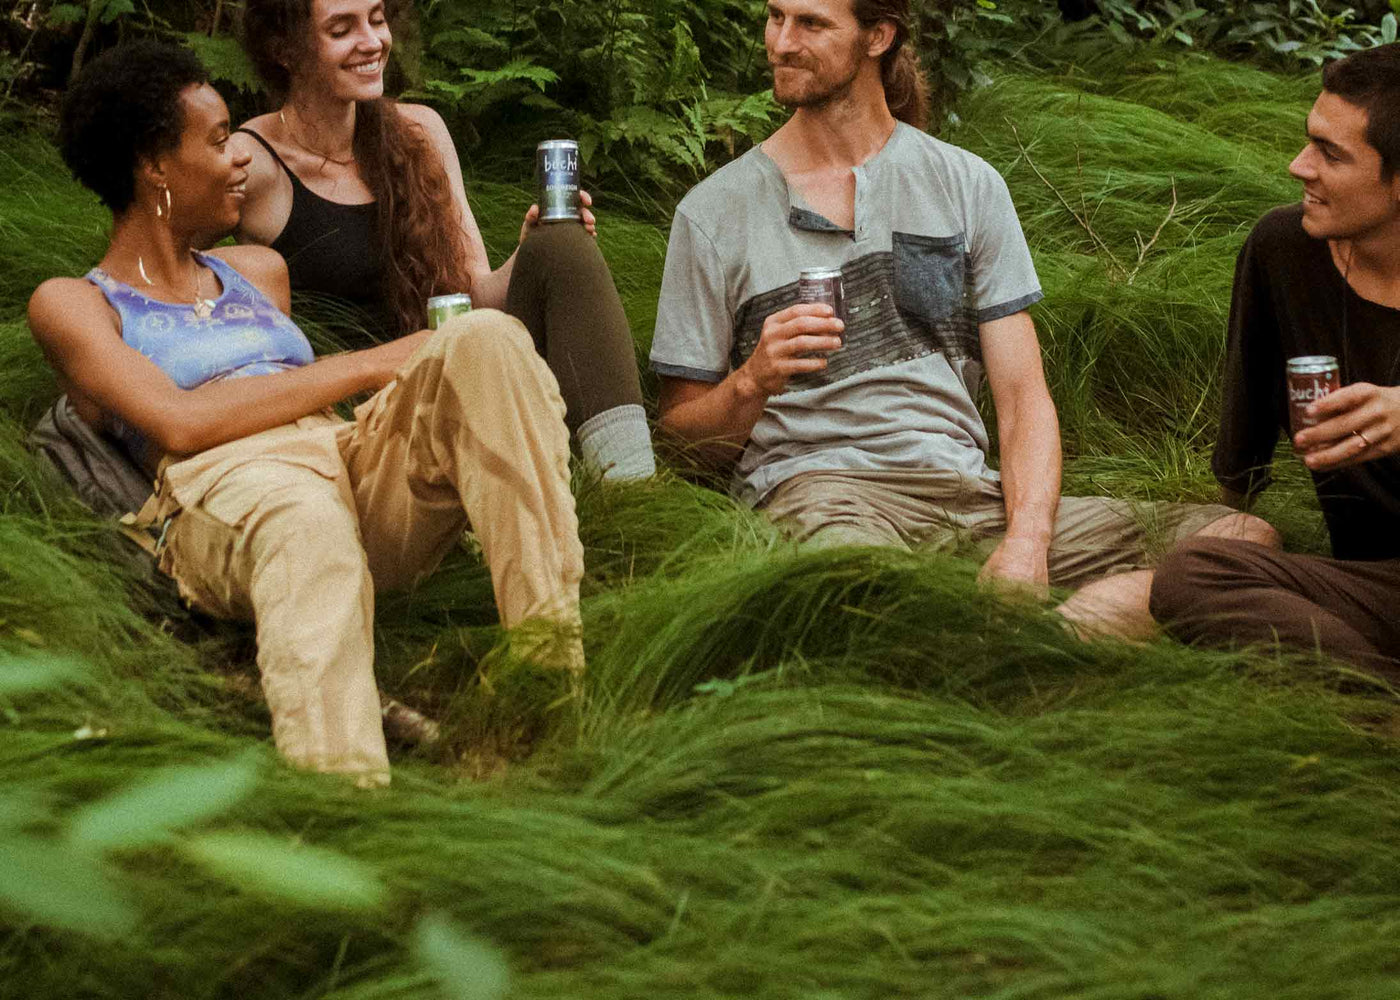 4 friends on a hike, lounging in the grass, drinking Buchi. It seems fun, I'm lowkey jealous.